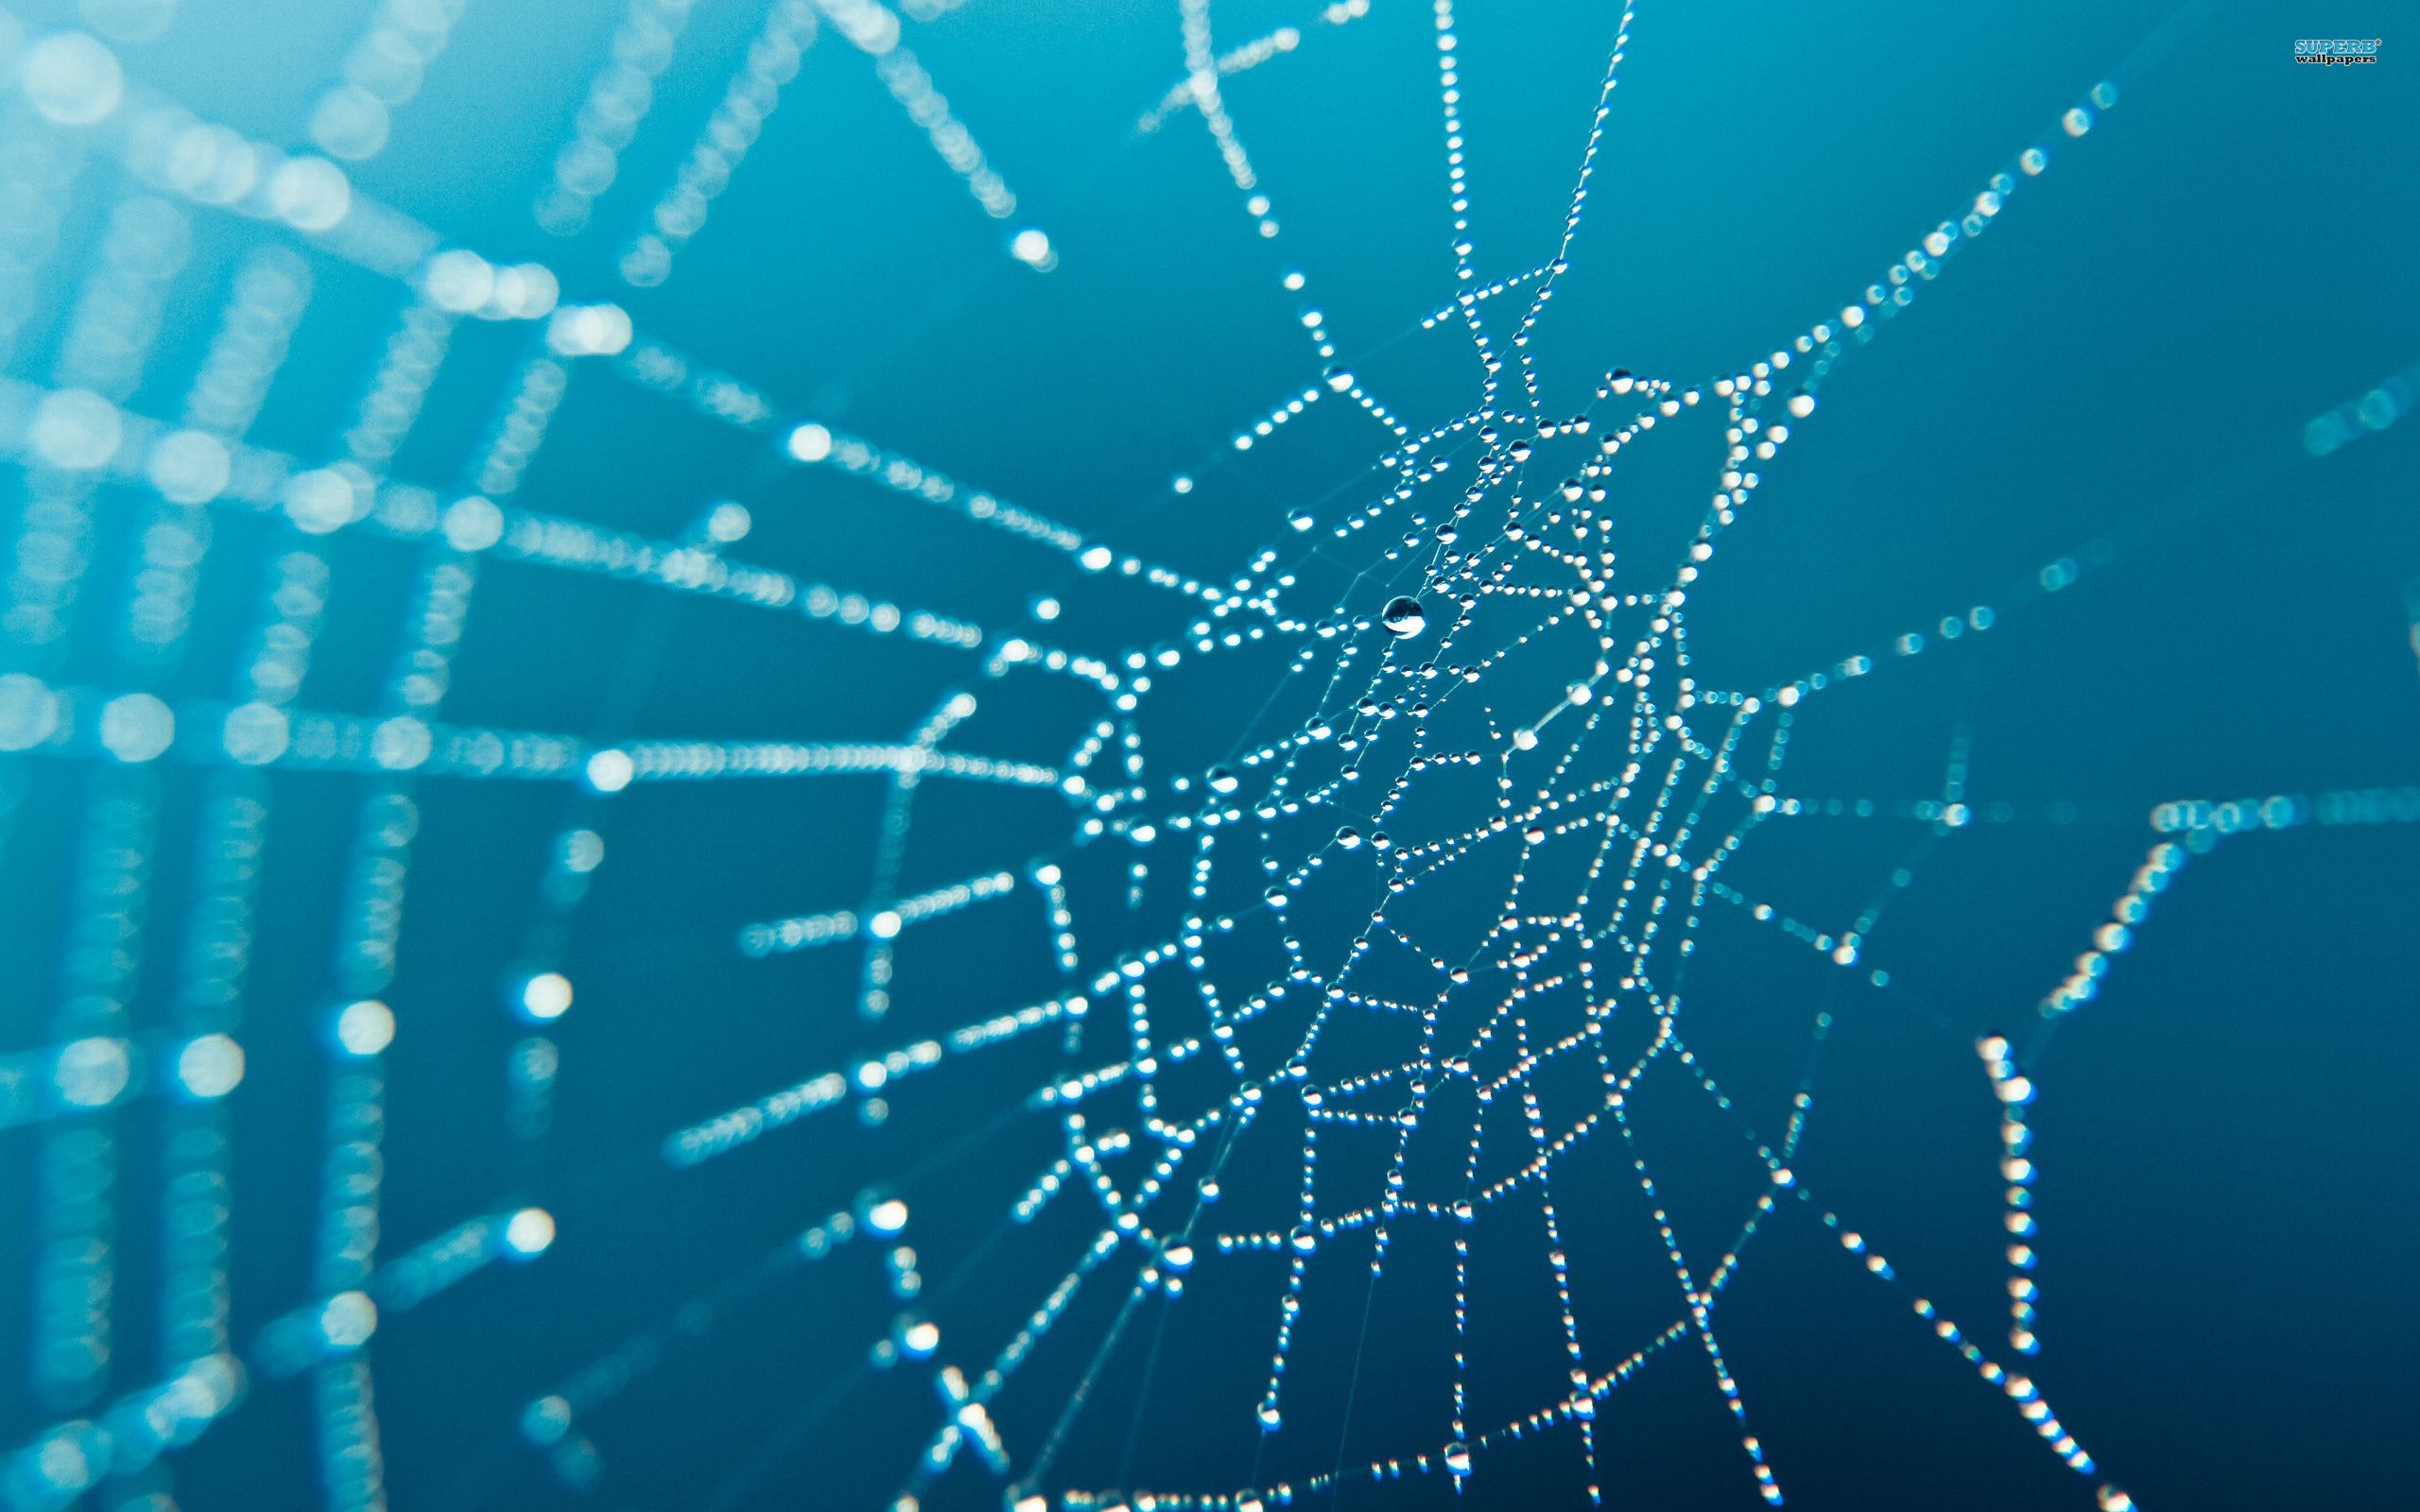 Spider Web - wallpaper.